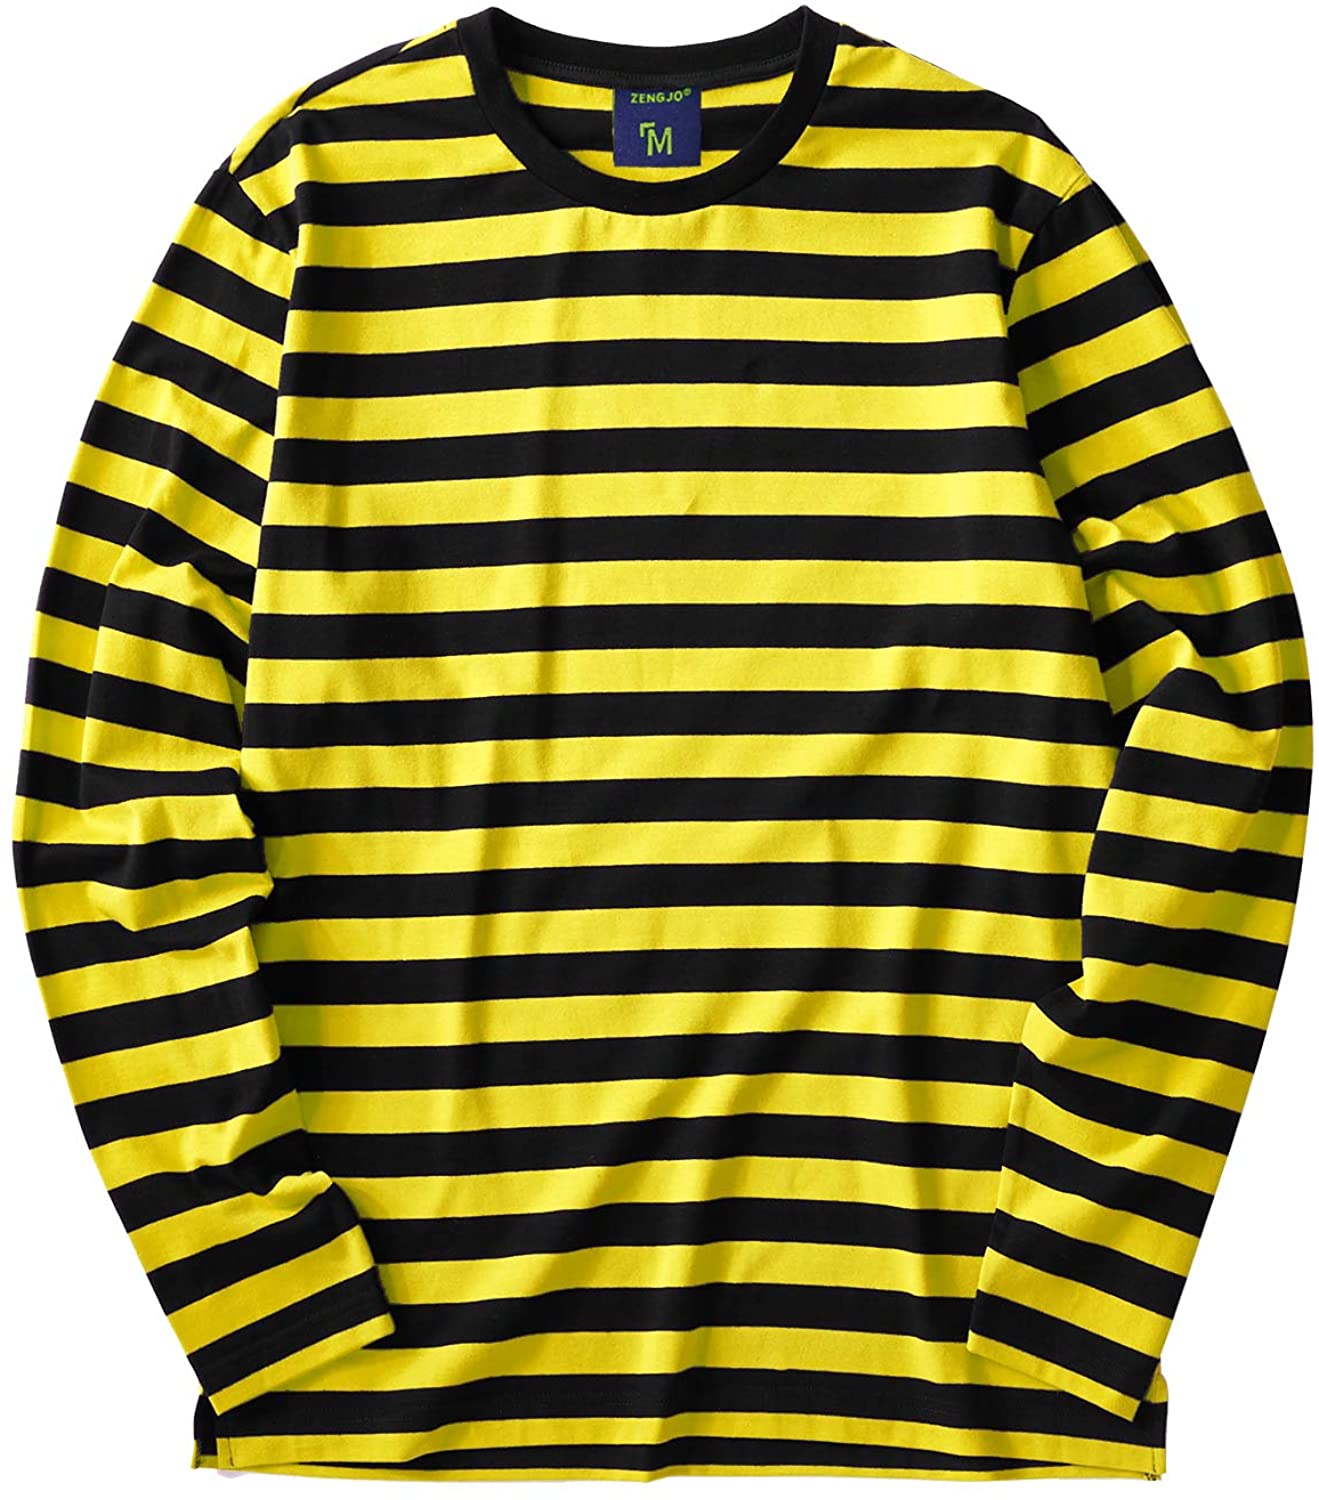 Zengjo Men's Casual Cotton Spandex Striped Crewneck Long-Sleeve T-Shirt Basic Pullover Stripe tee Shirt